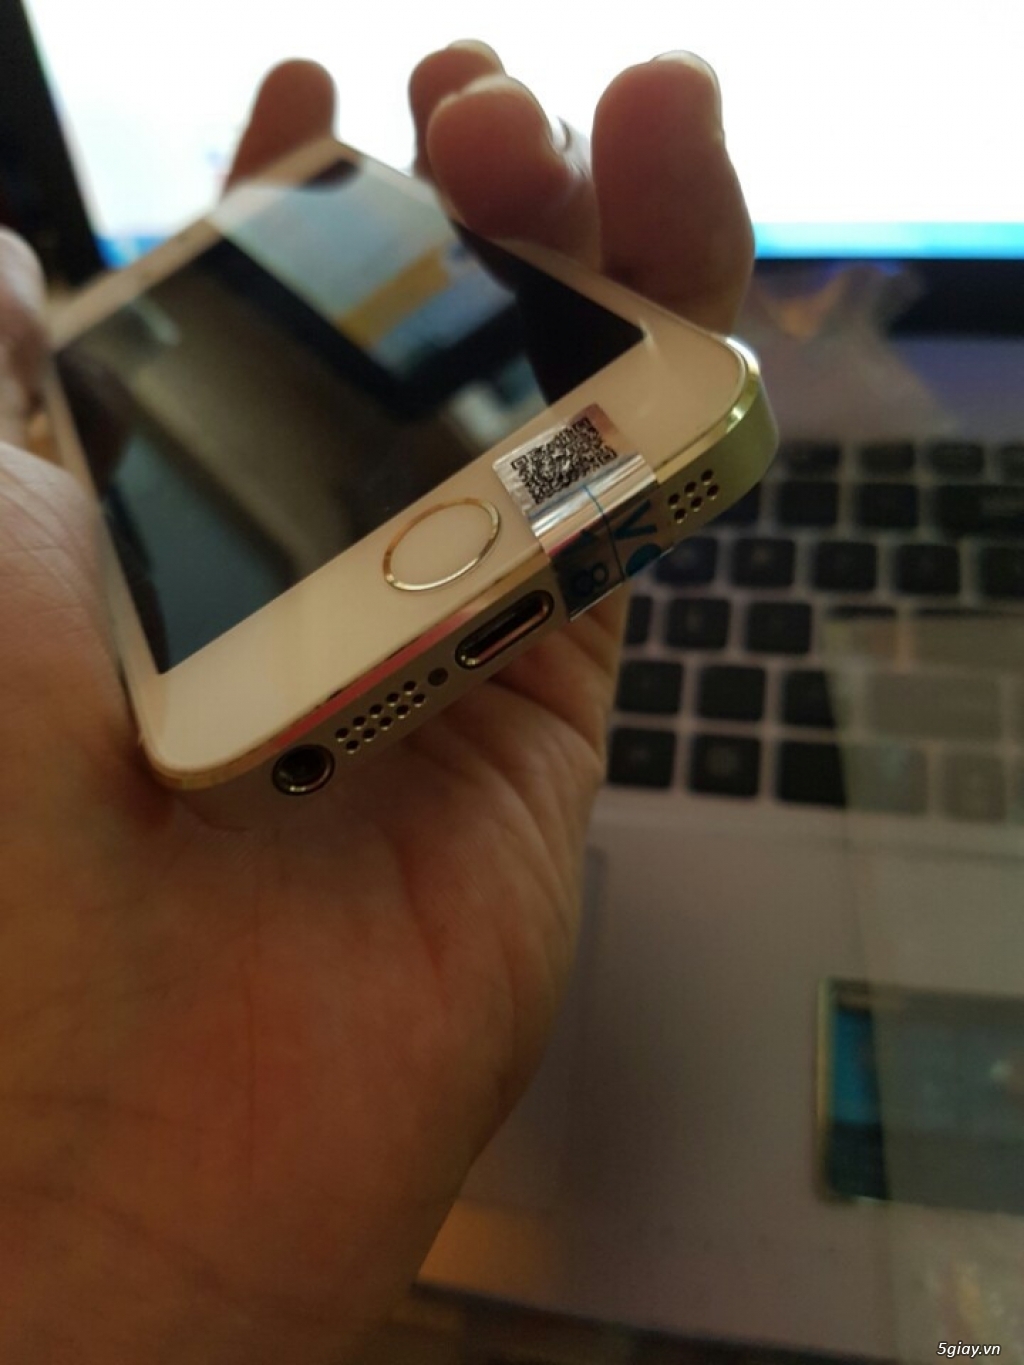 iphone 5s gold 16gb - 1